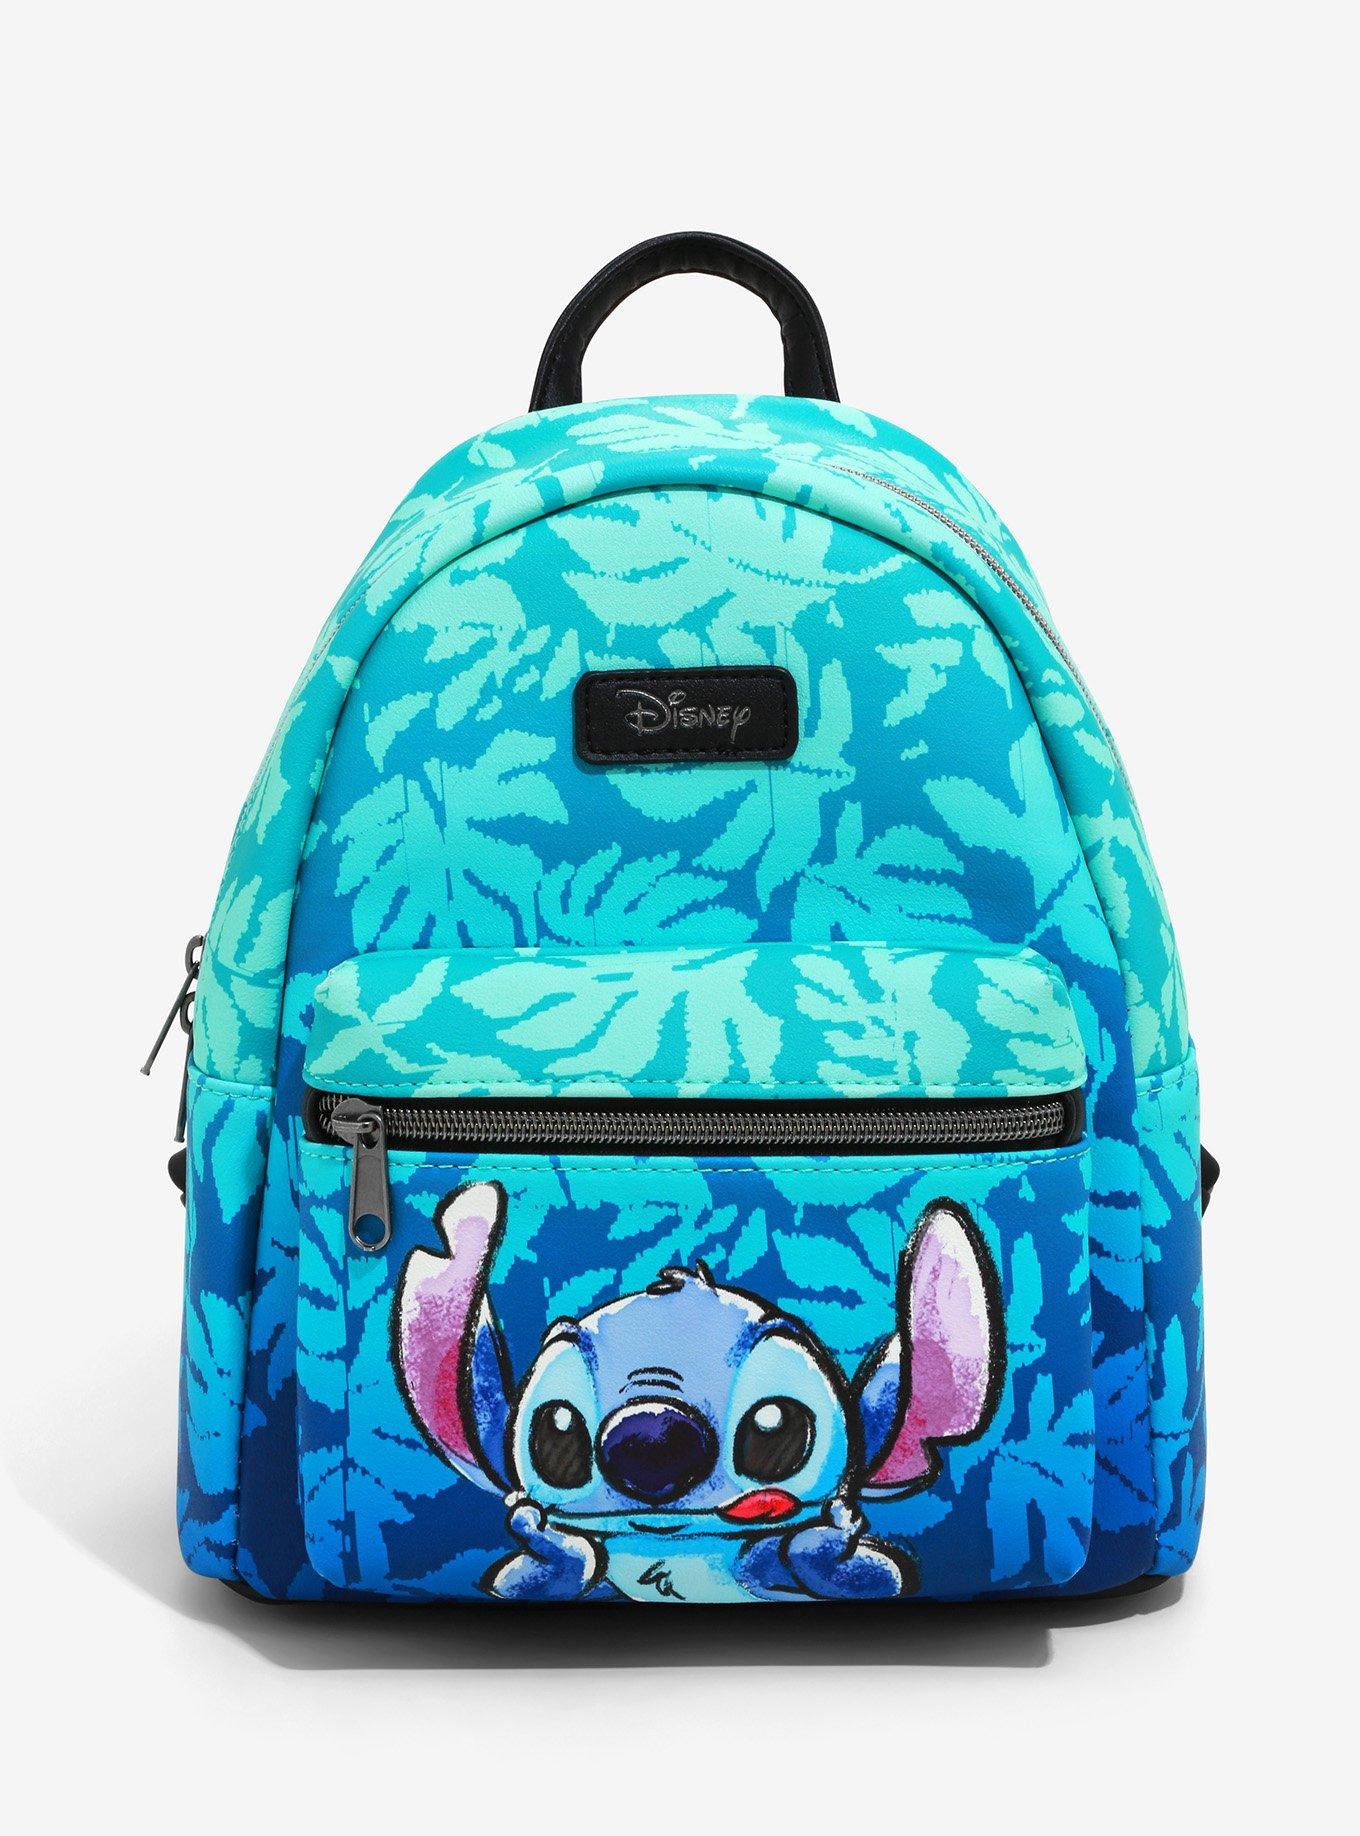 New Cartoon Stitch Backpack Girl Backpack For Teenagers Girls